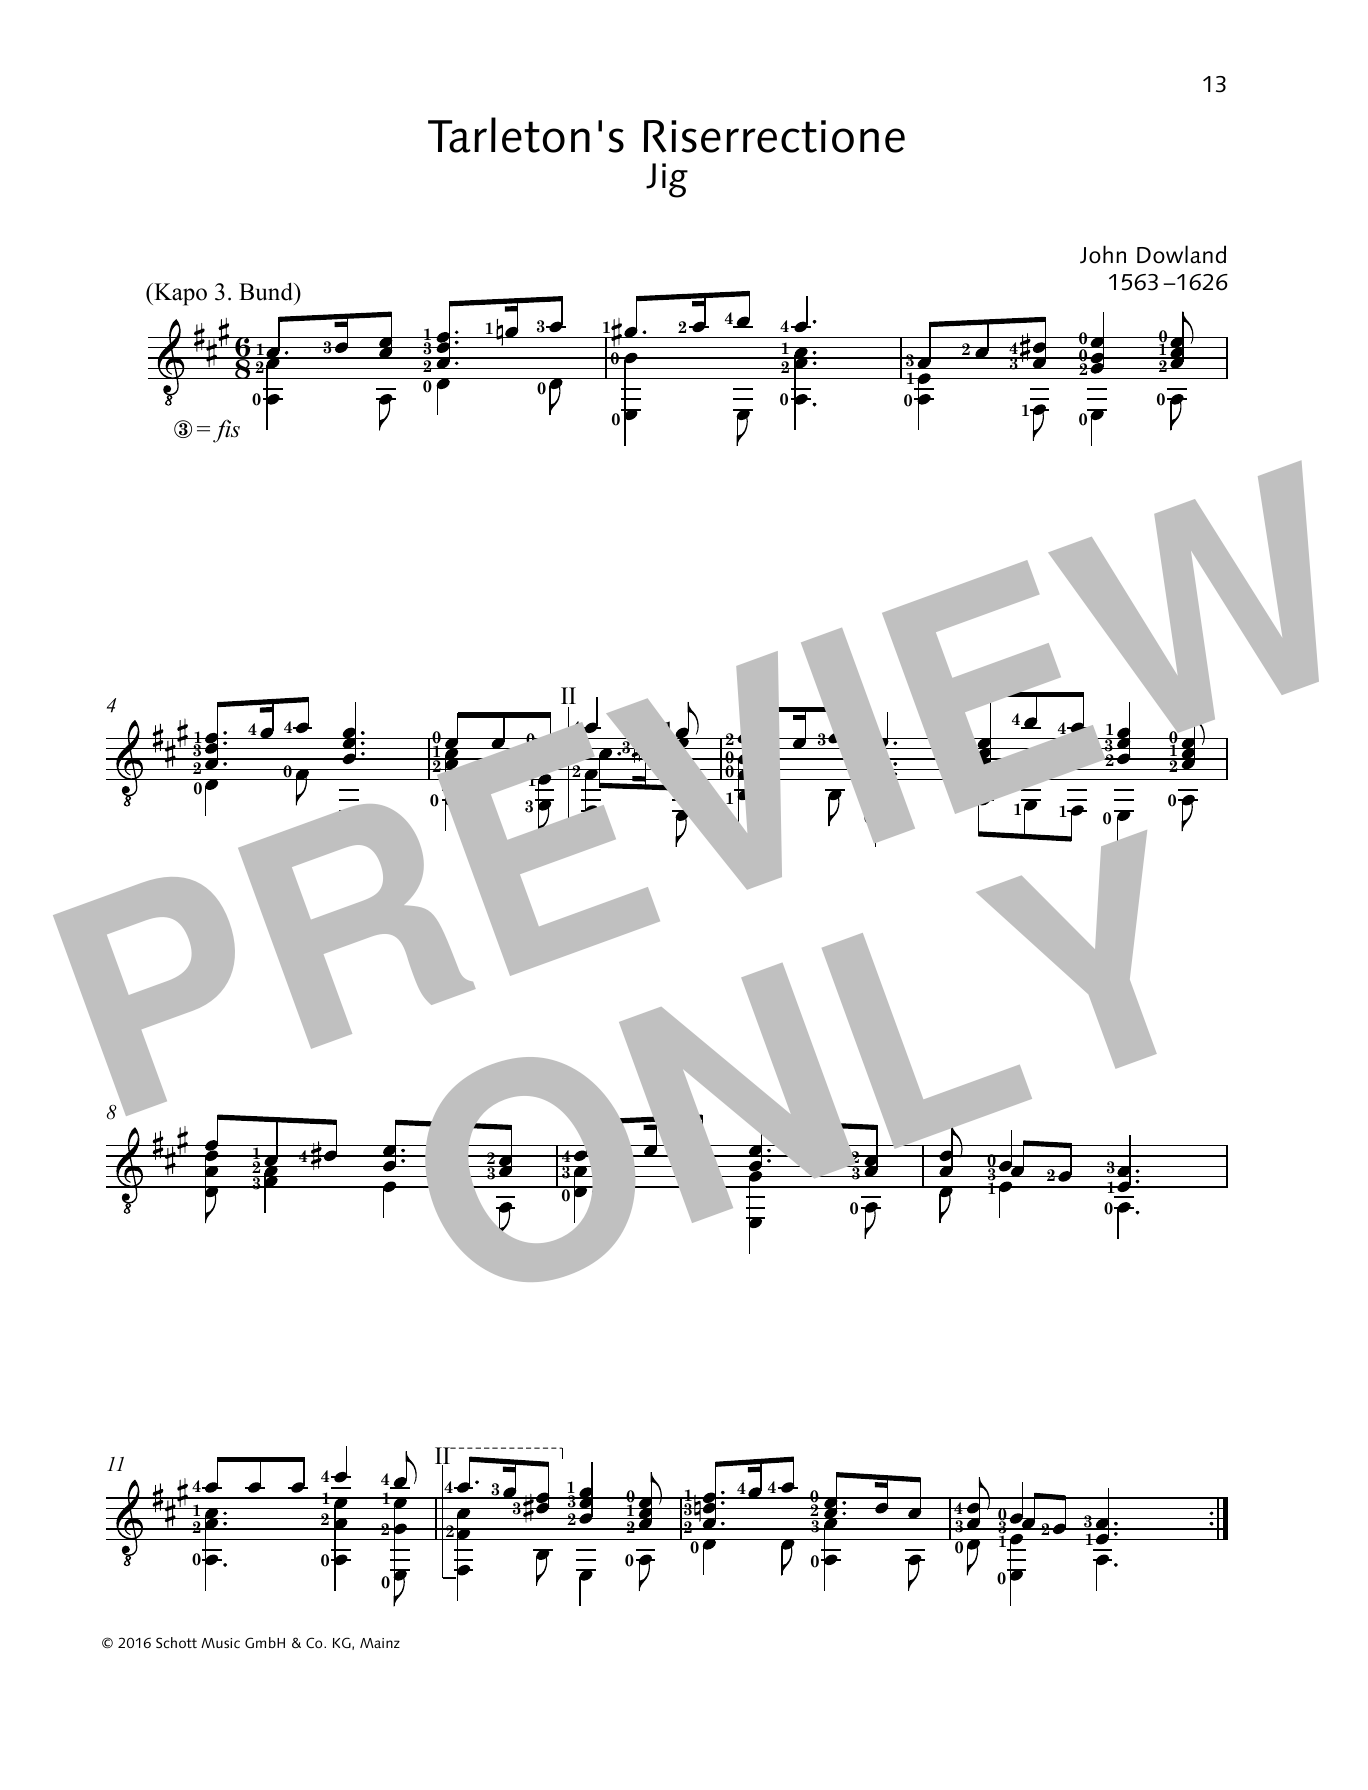 John Dowland Tarleton's Riserrectione Sheet Music Notes & Chords for Solo Guitar - Download or Print PDF